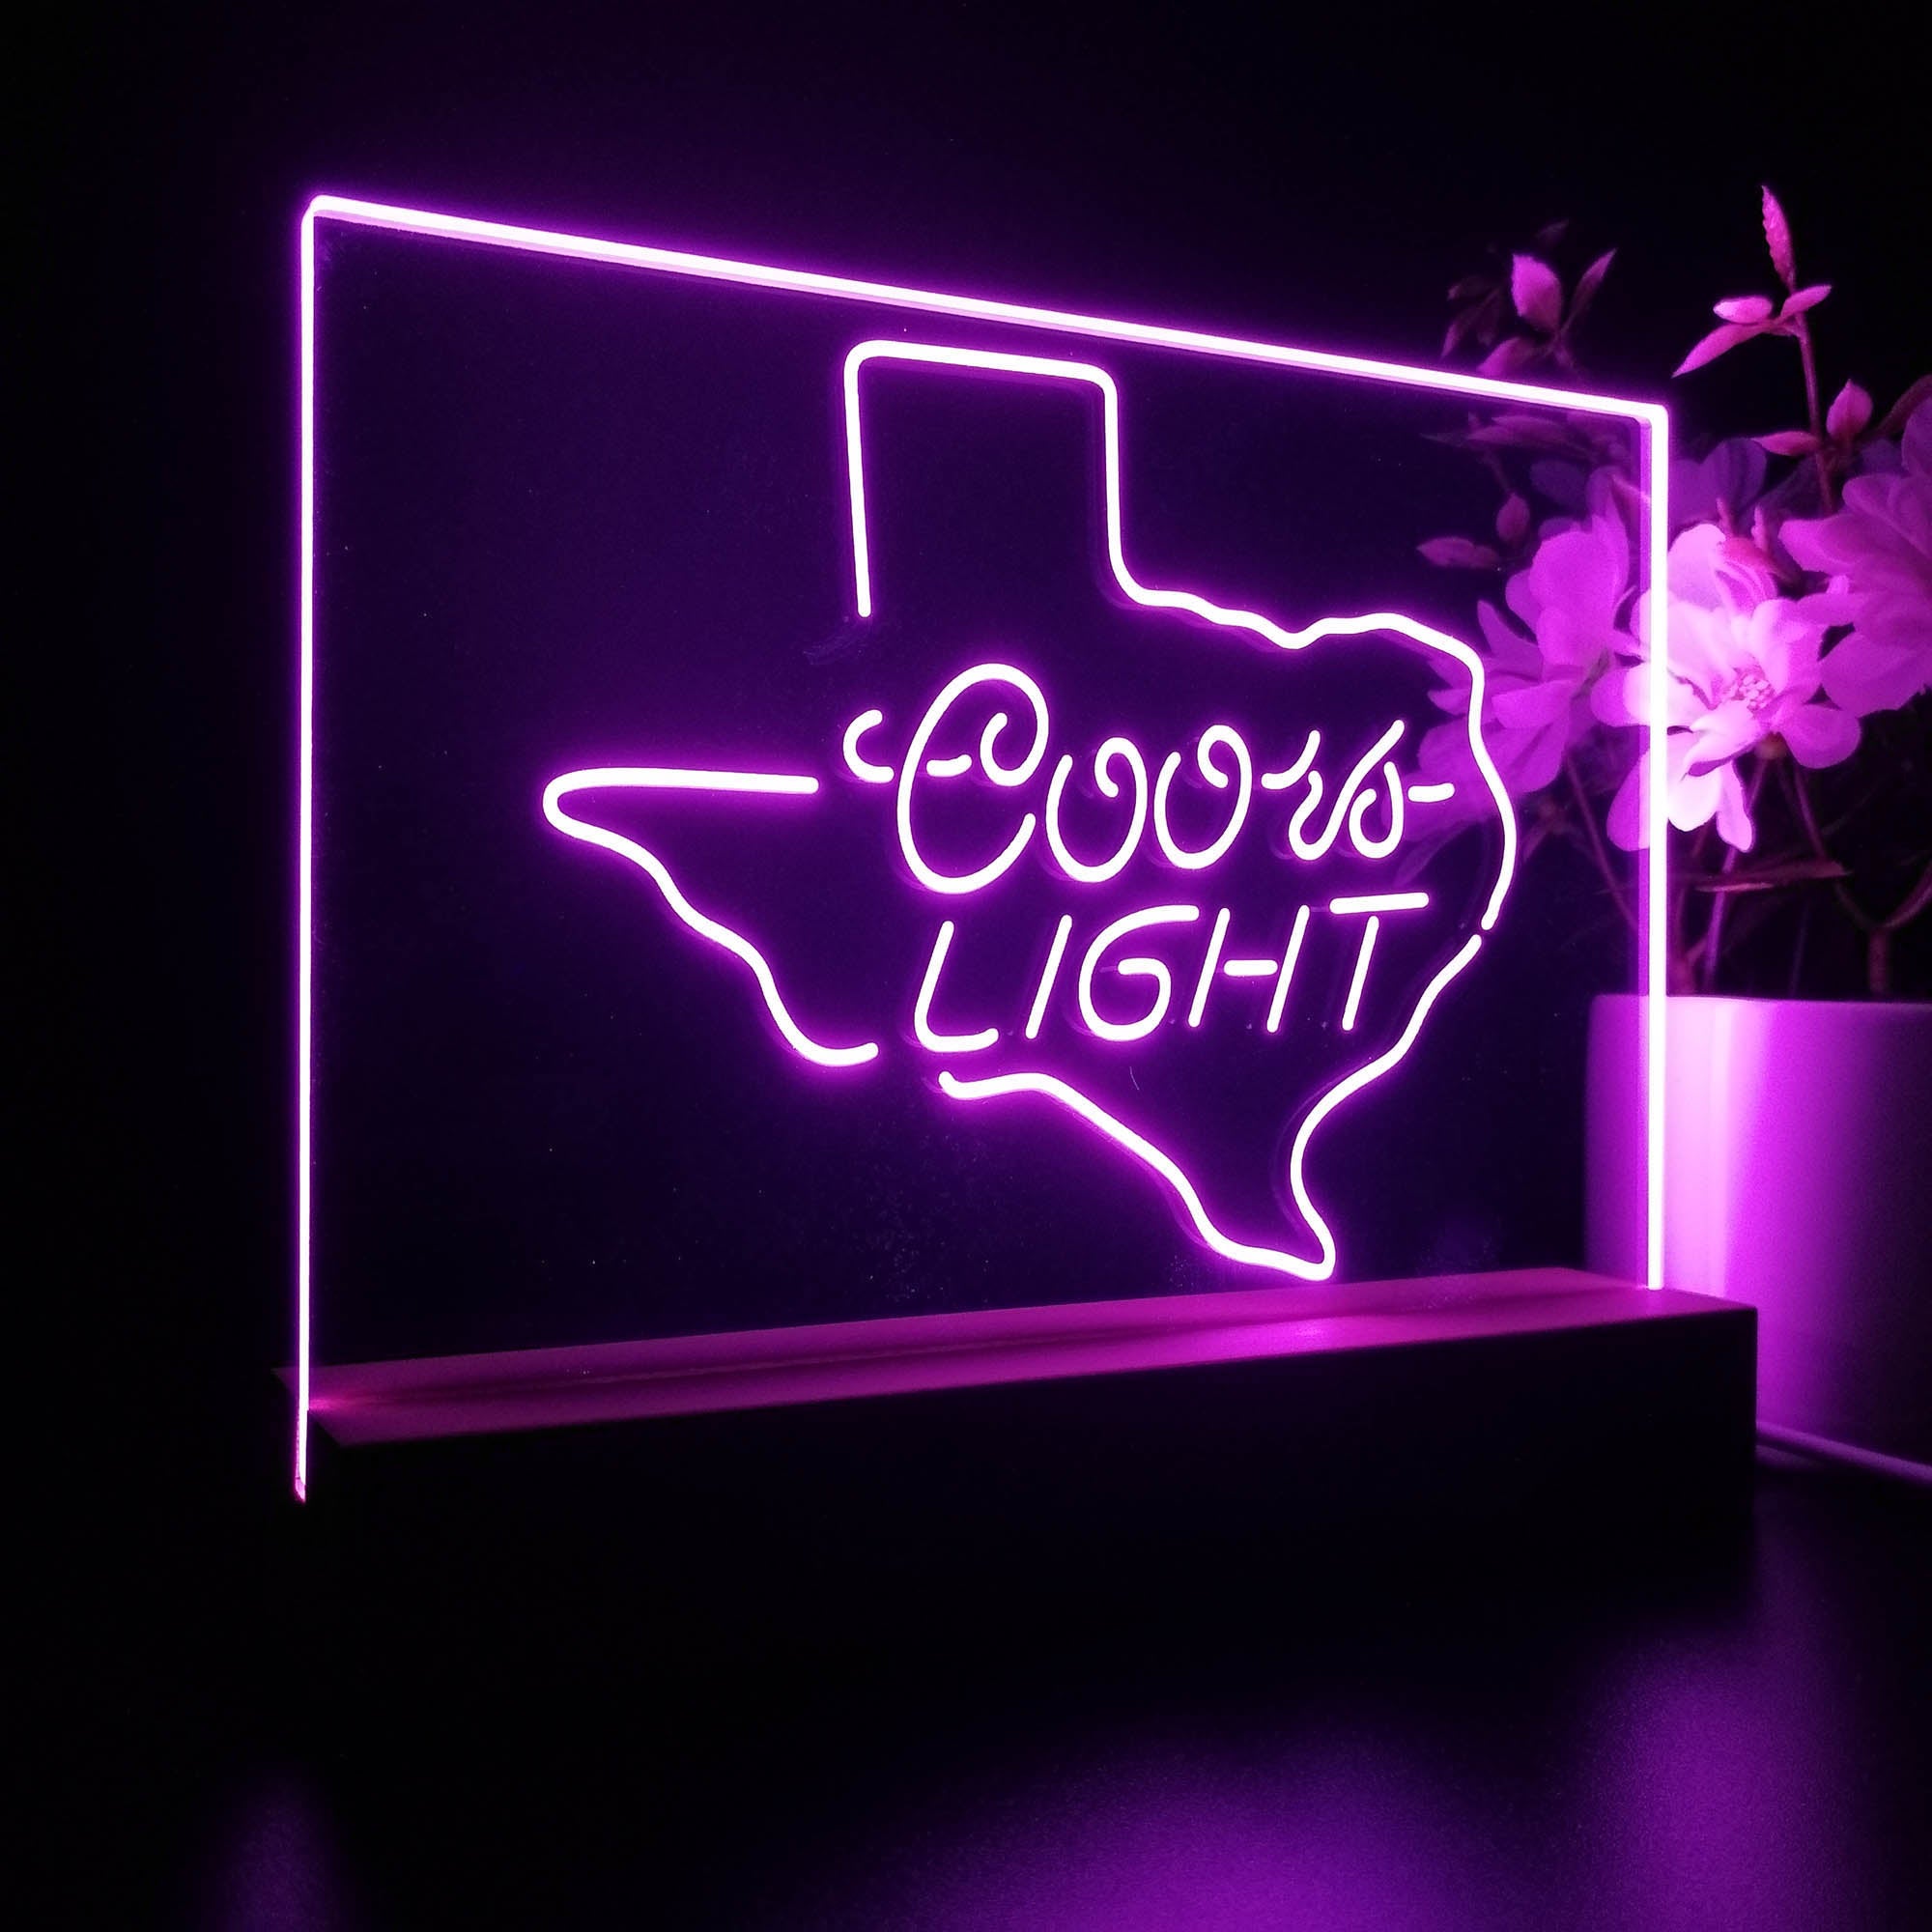 Coors Light Texas Night Light 3D Illusion Lamp Home Bar Decor